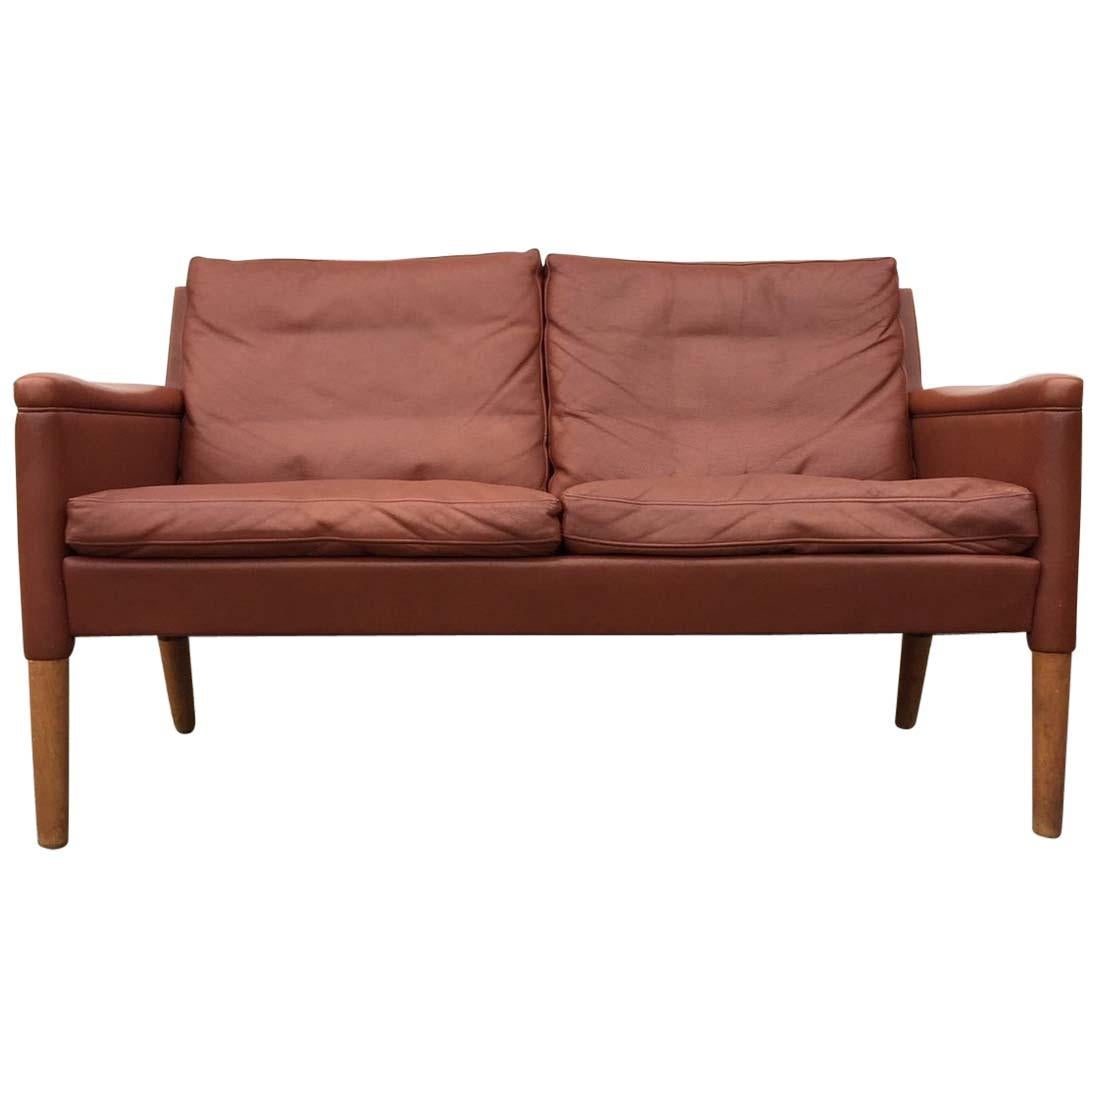 Danish Modern Settee-Sofa in Cognac Tanned Leather, Model 55 by Kurt Østervig